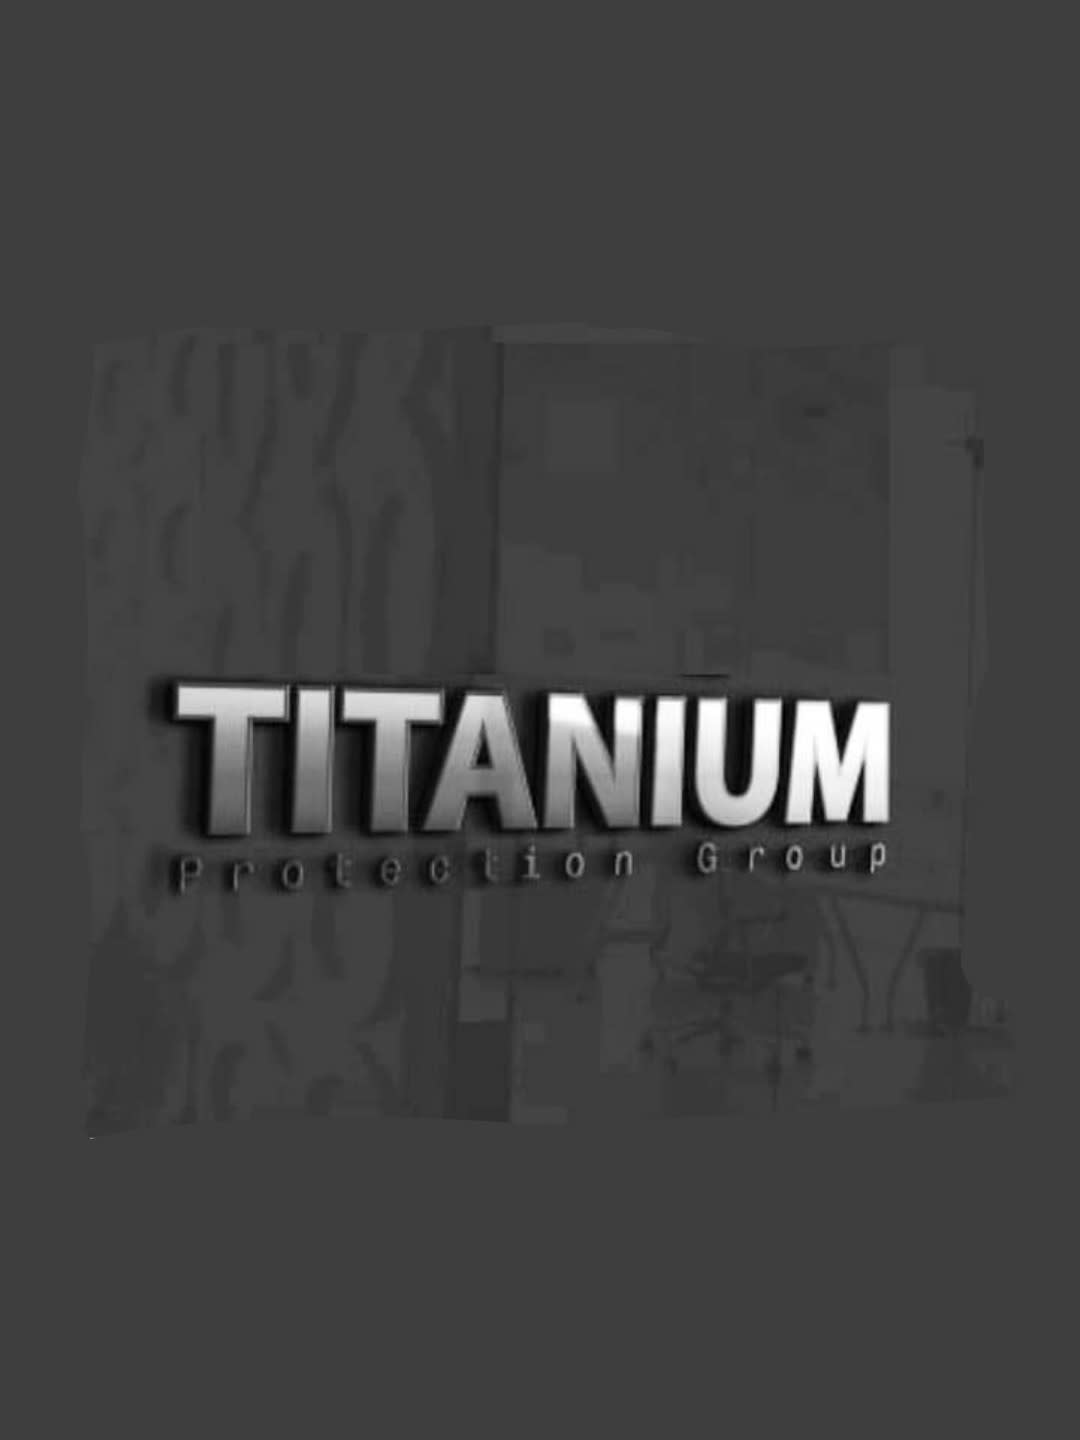 Titanium Protection Group